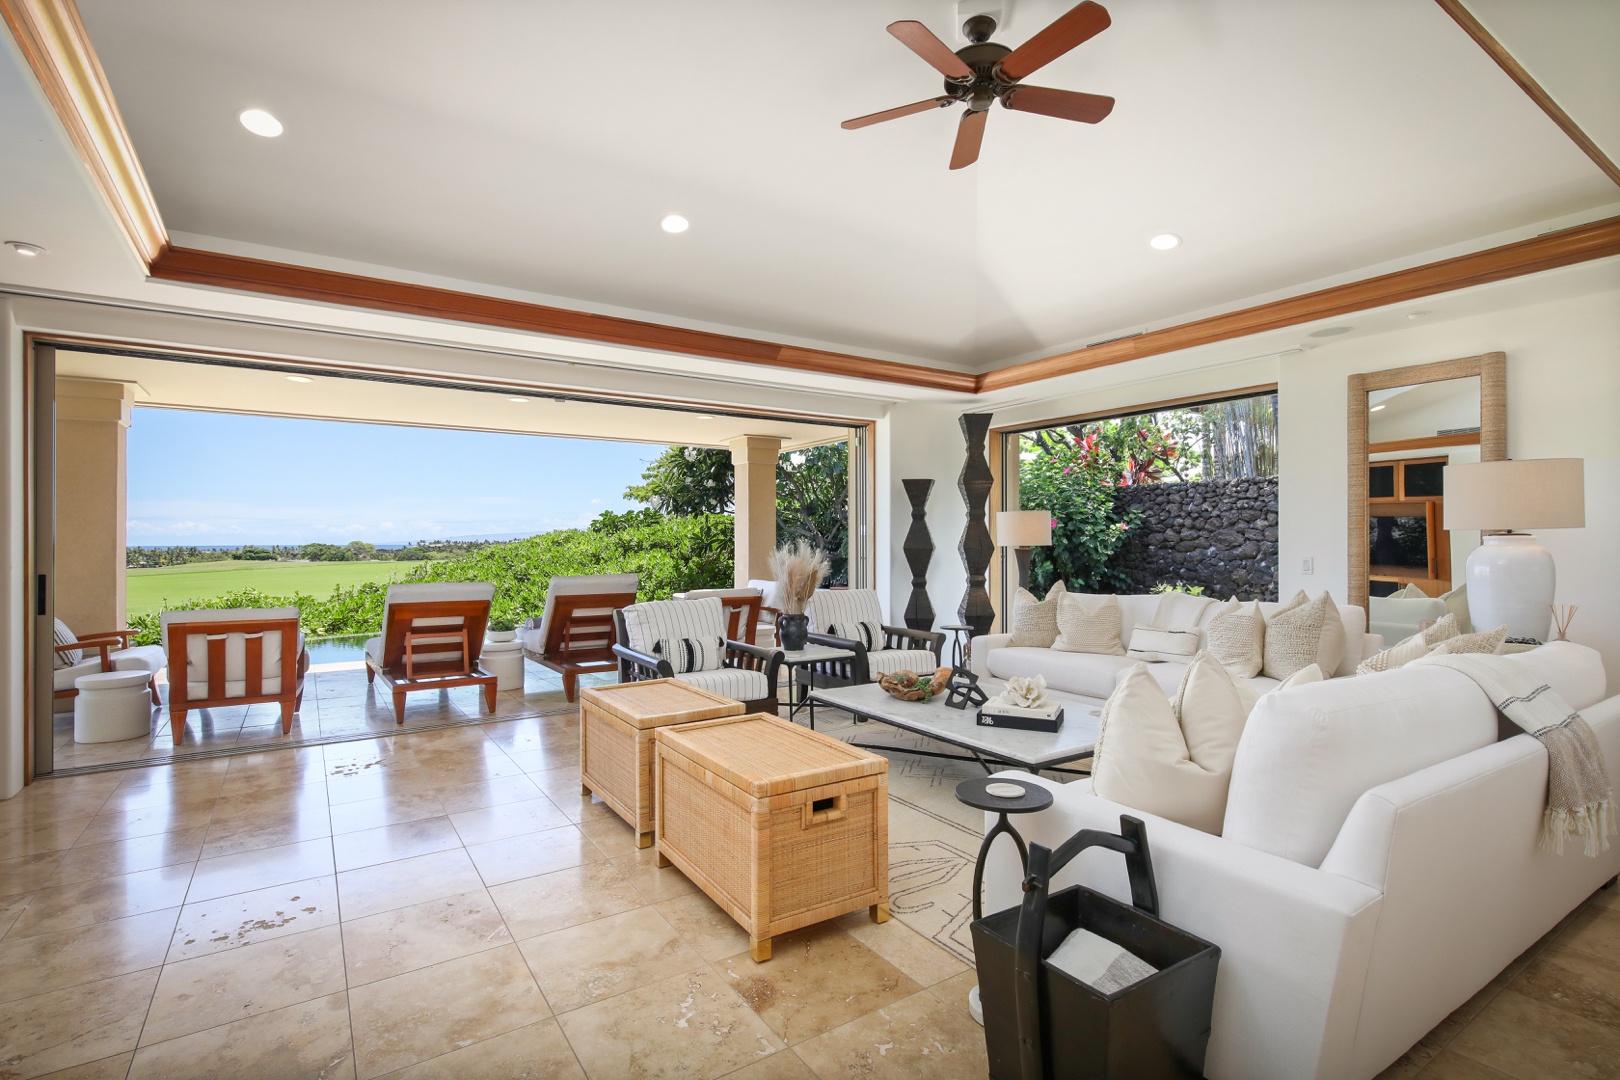 Kailua Kona Vacation Rentals, 4BD Pakui Street (147) Estate Home at Four Seasons Resort at Hualalai - Reverse view showcasing floor to ceiling sliding pocket doors to pool deck.